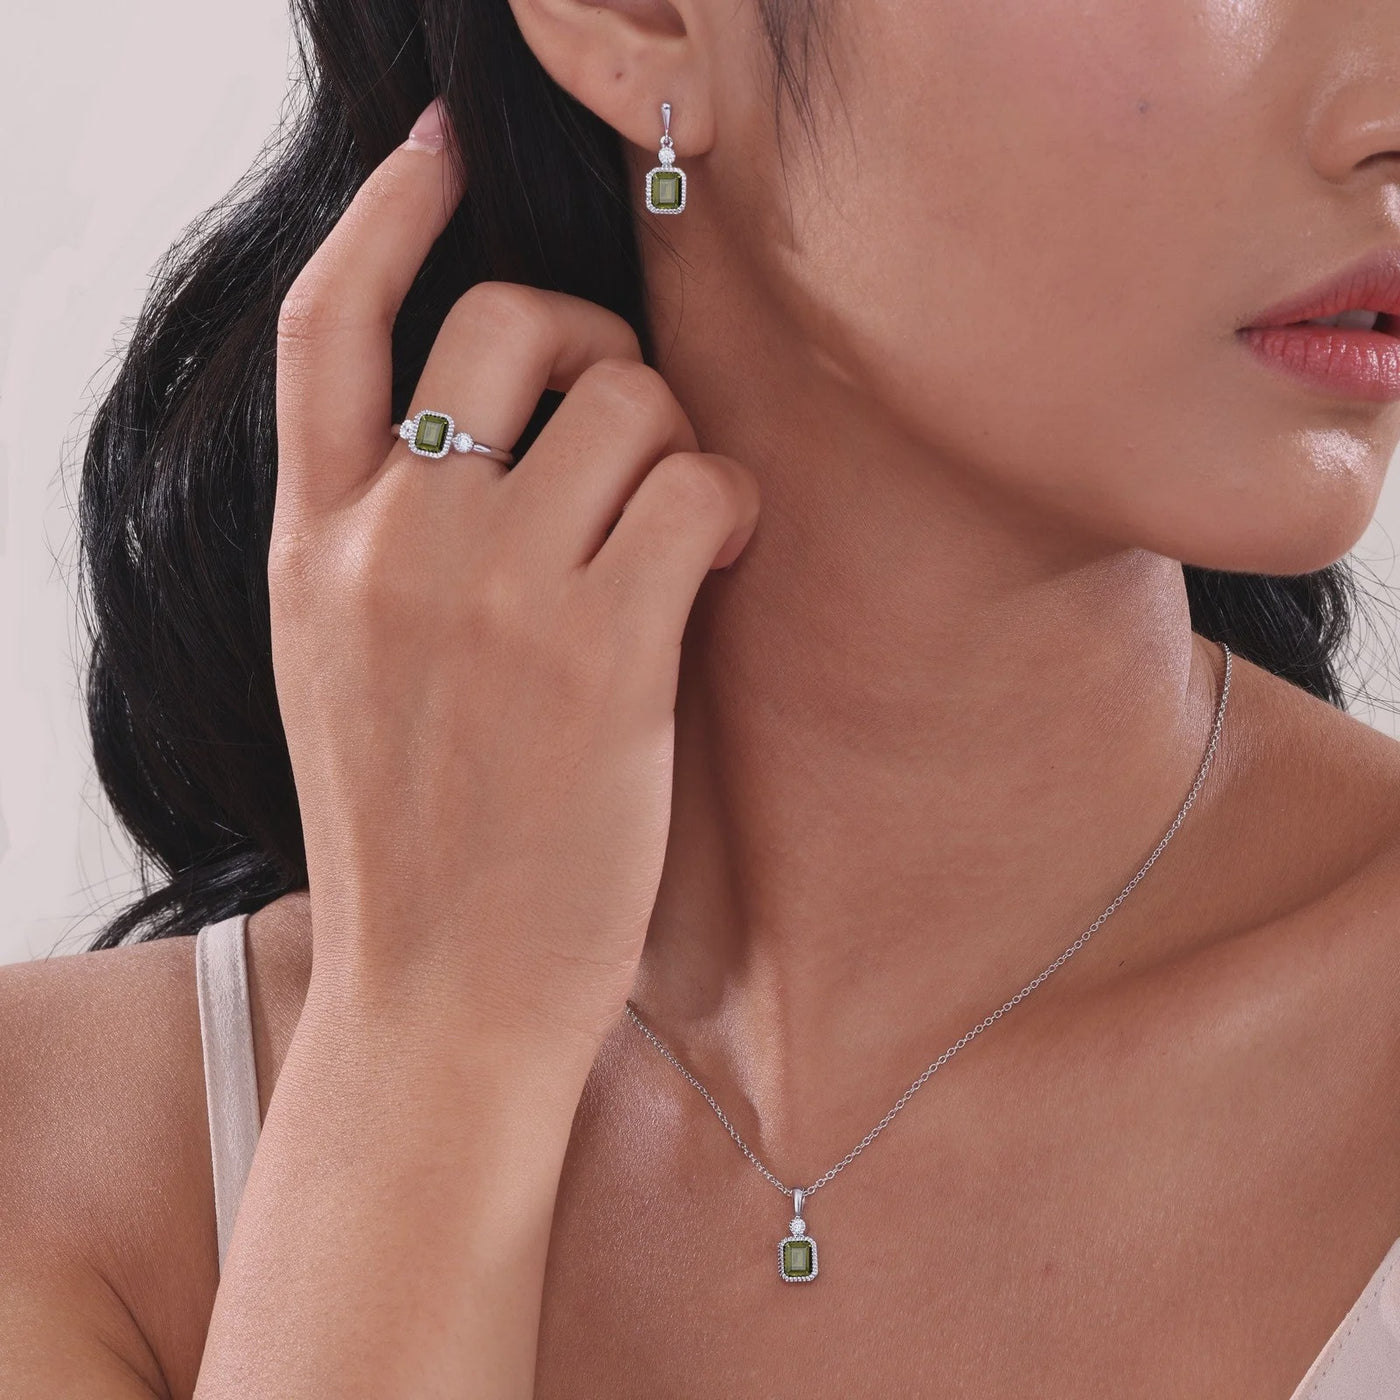 Simulated Emerald-Cut Peridot & Diamond August Birthstone Necklace